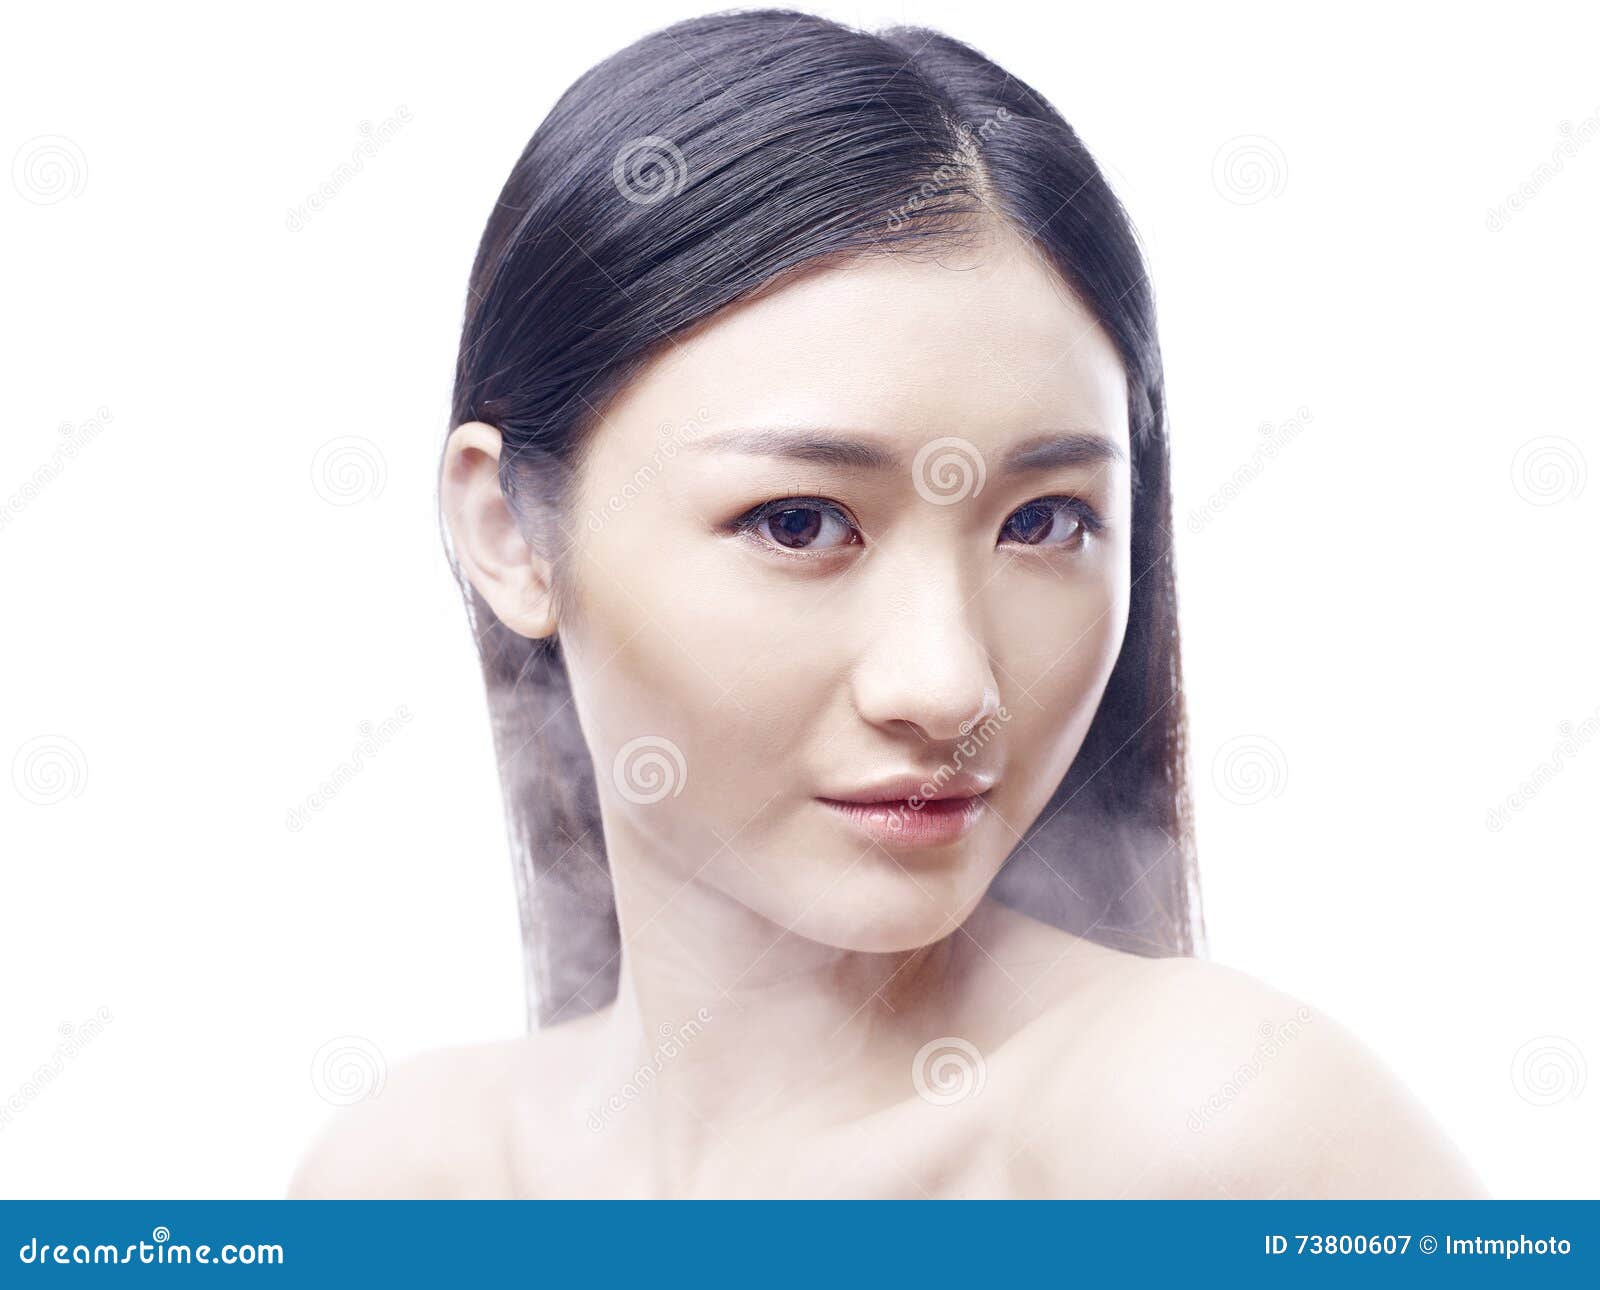 Korean nude girl models